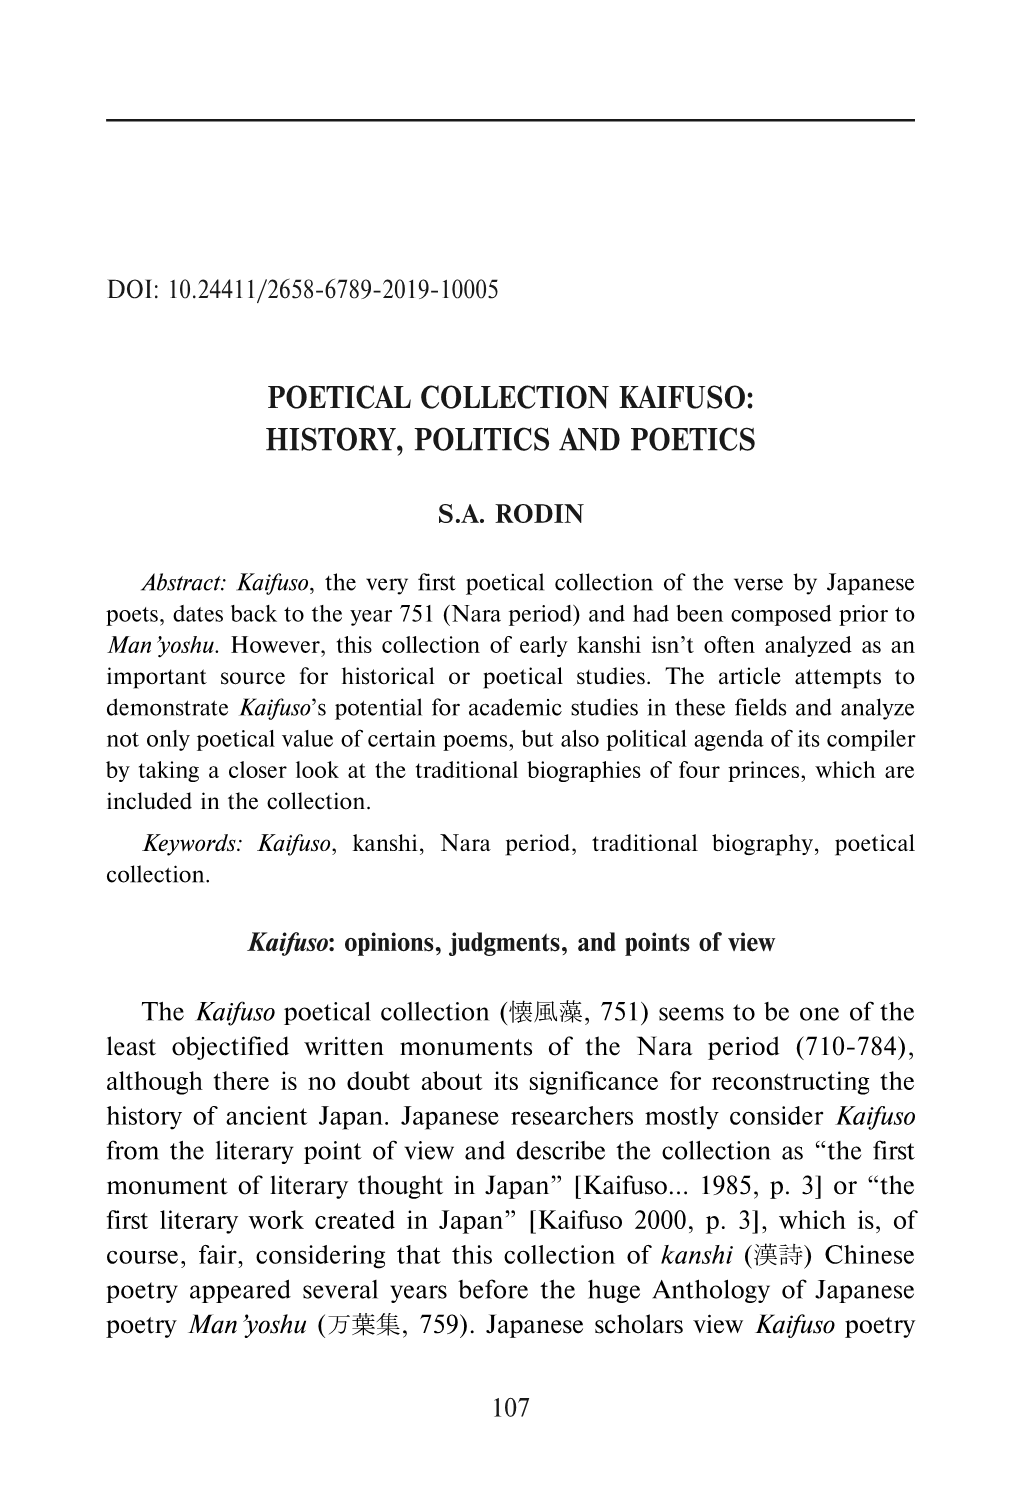 Poetical Collection Kaifuso: History, Politics and Poetics